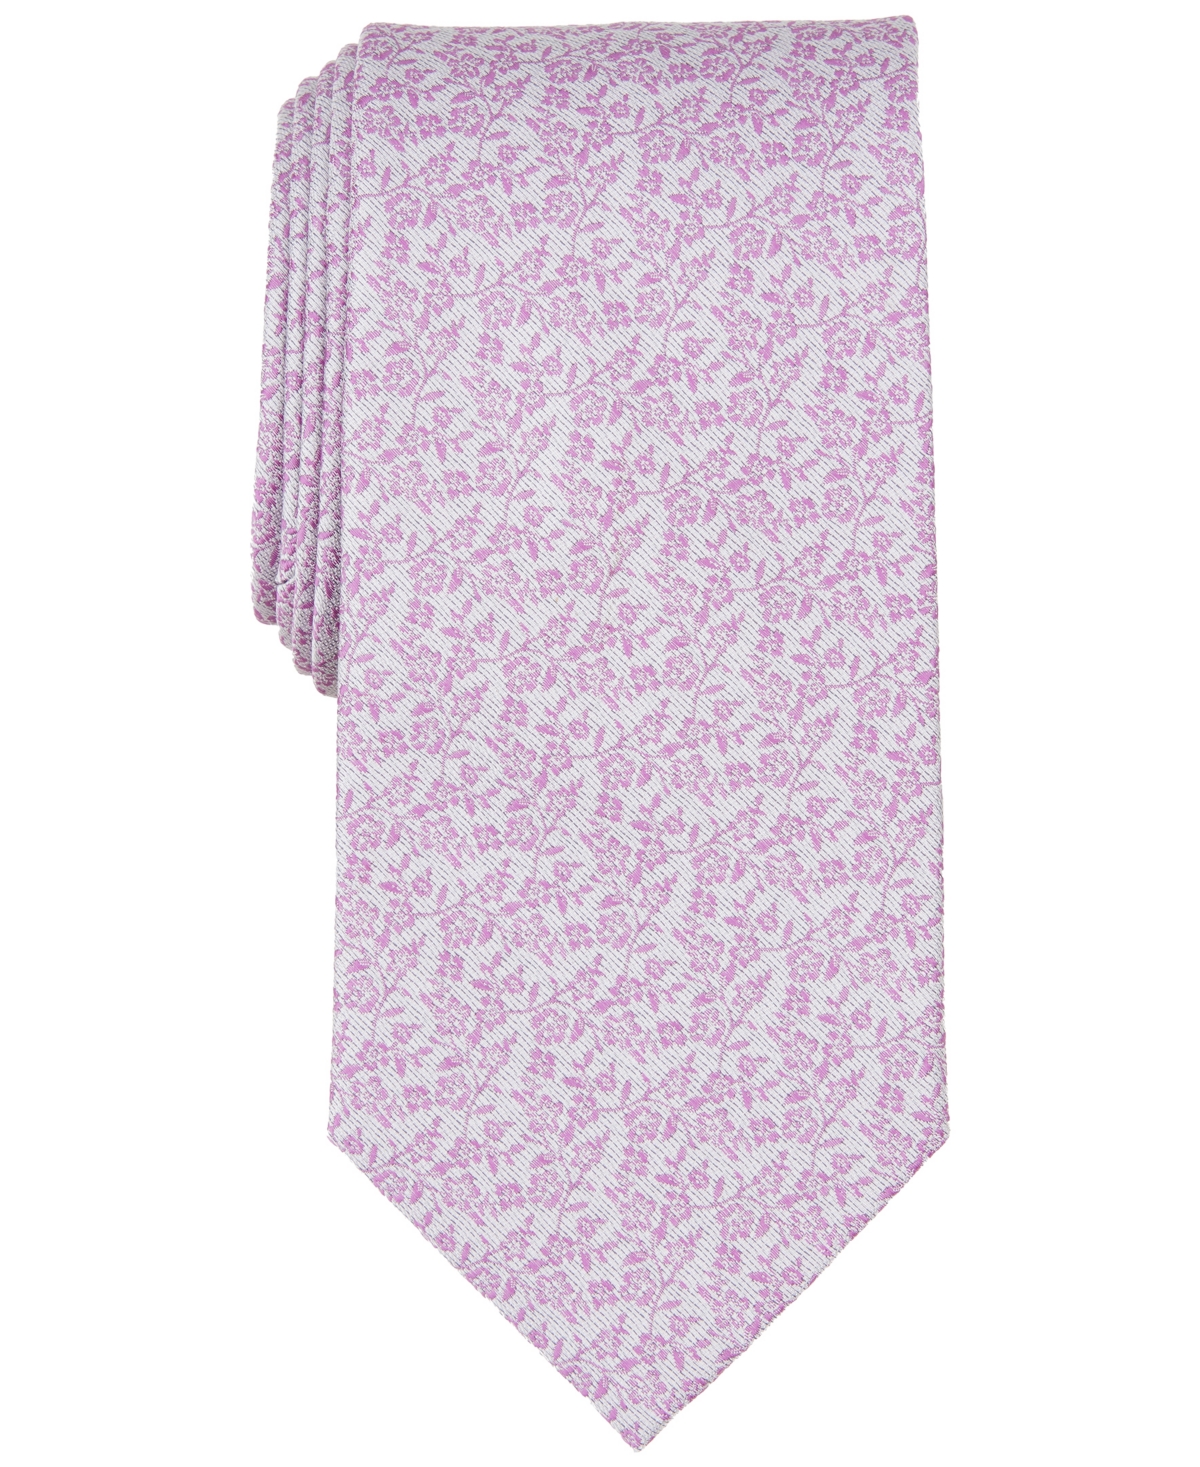 Michael Kors Men's Linley Floral Tie In Lavender